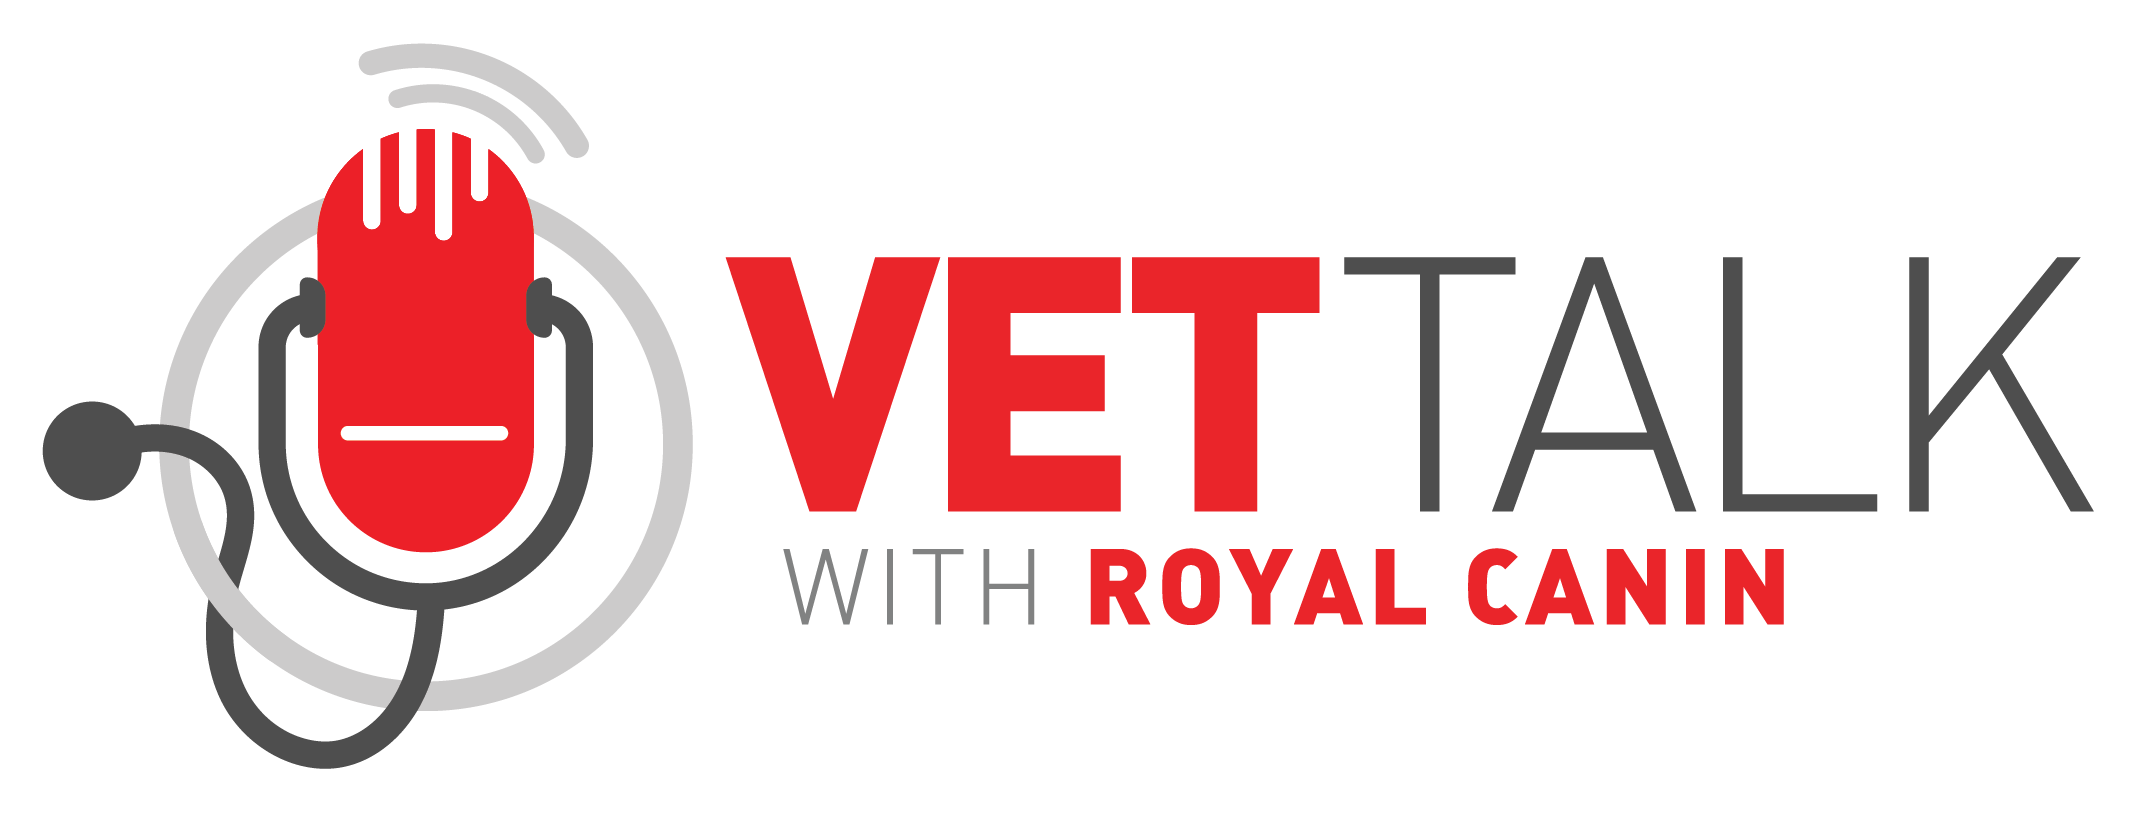 Vet Talk with Royal Canin | Royal Canin